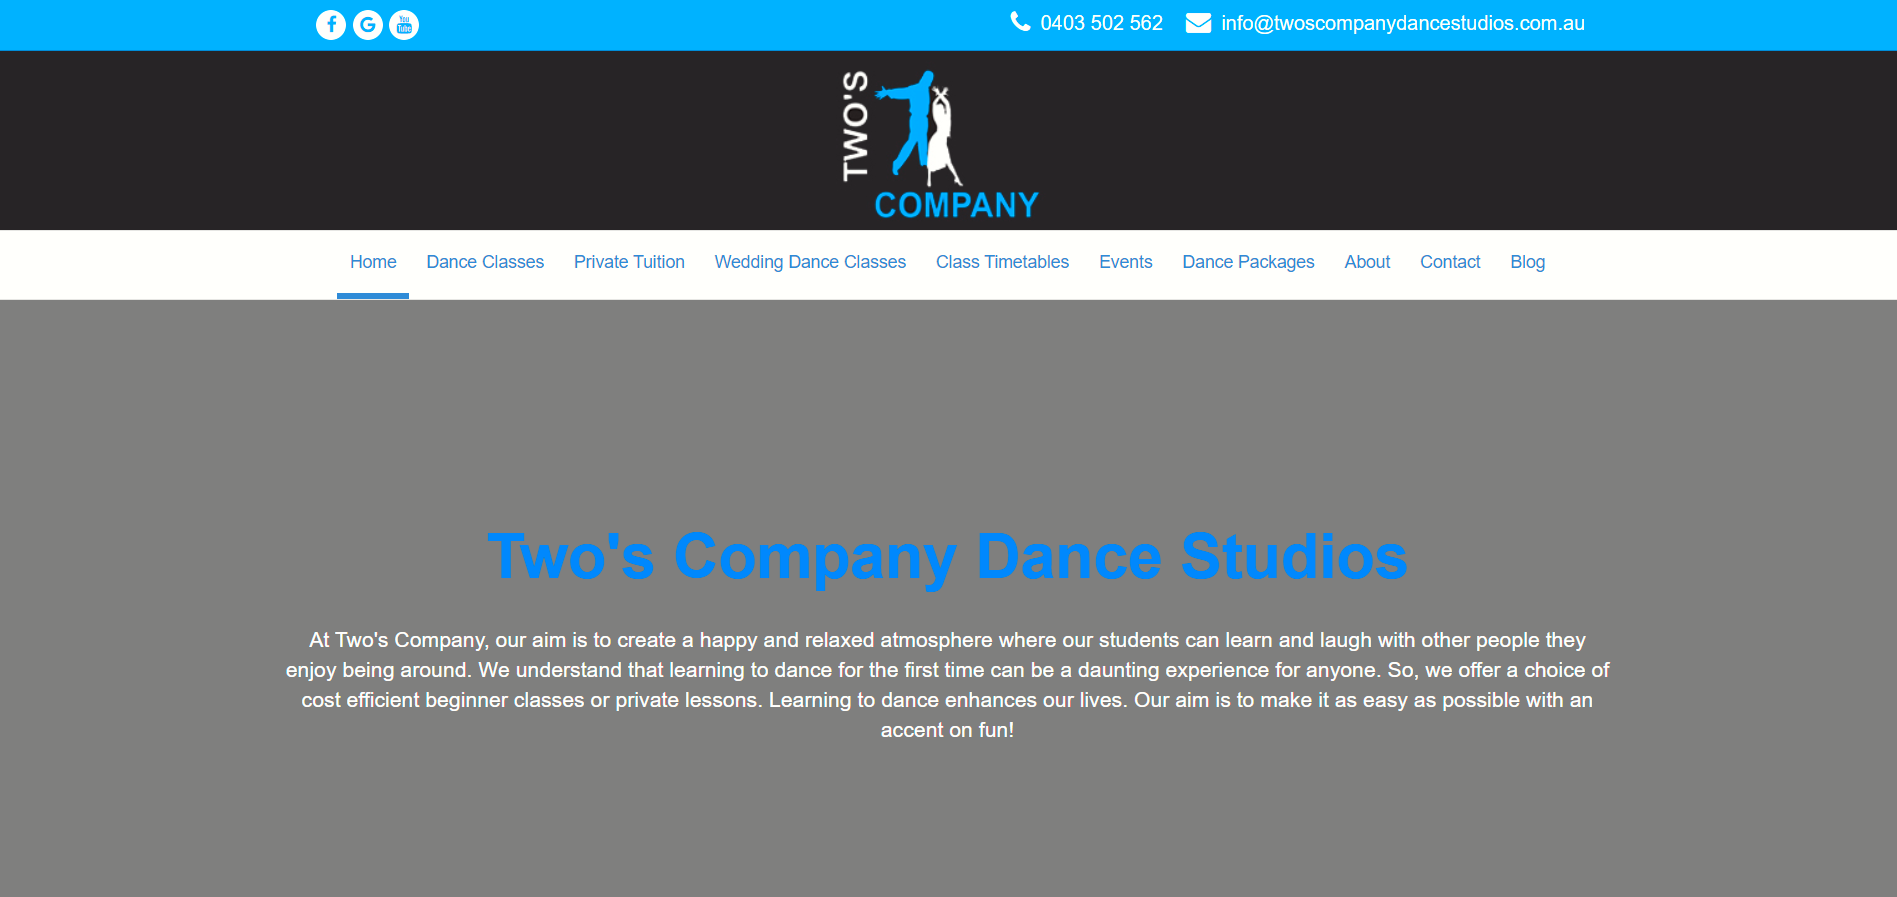 Two's Company Dance Studios